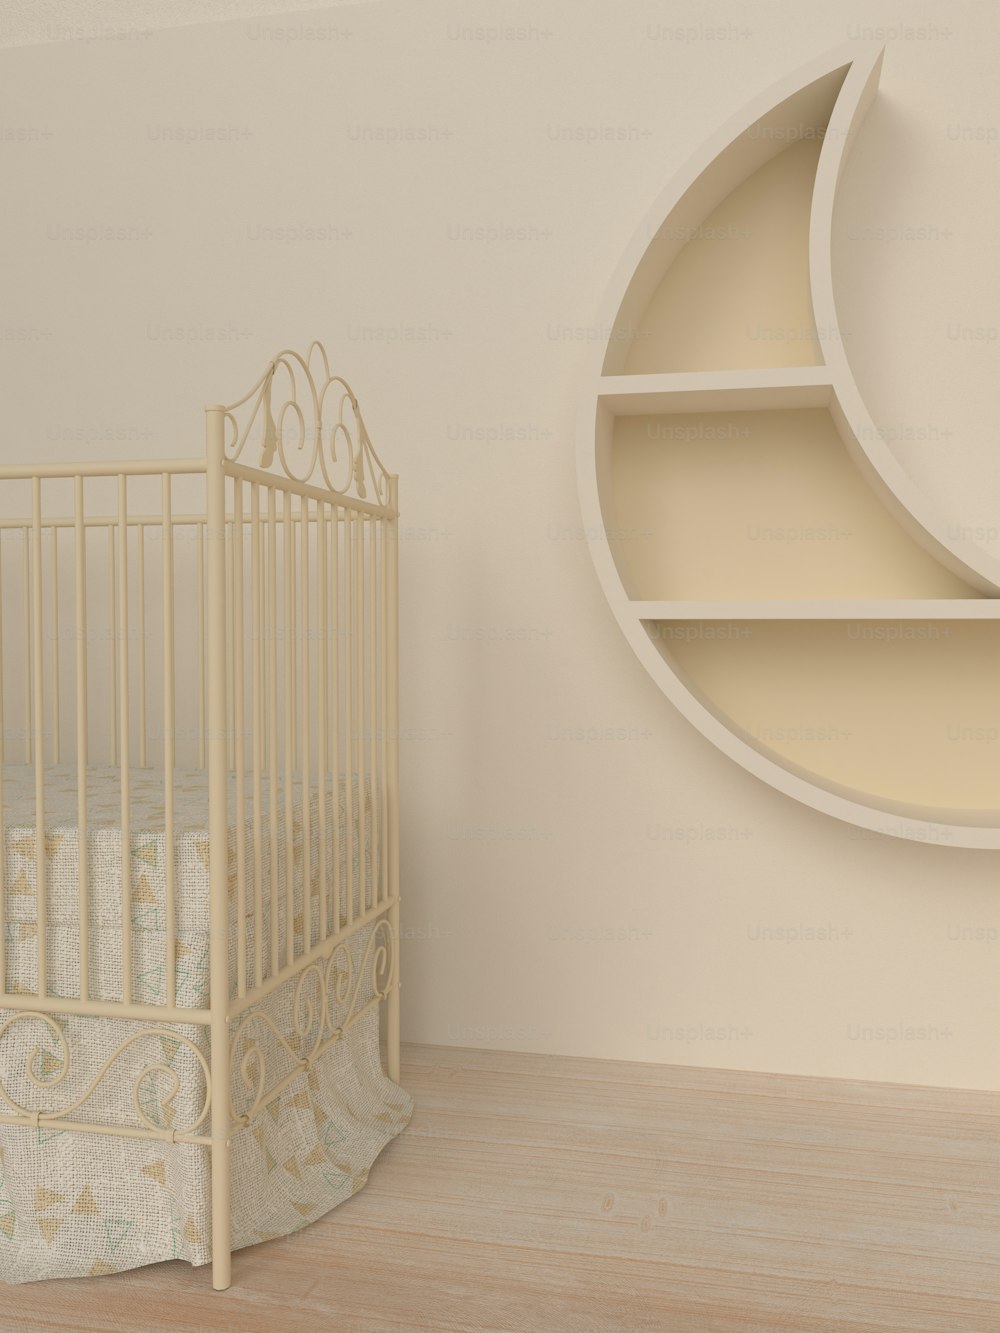 a baby crib next to a book shelf